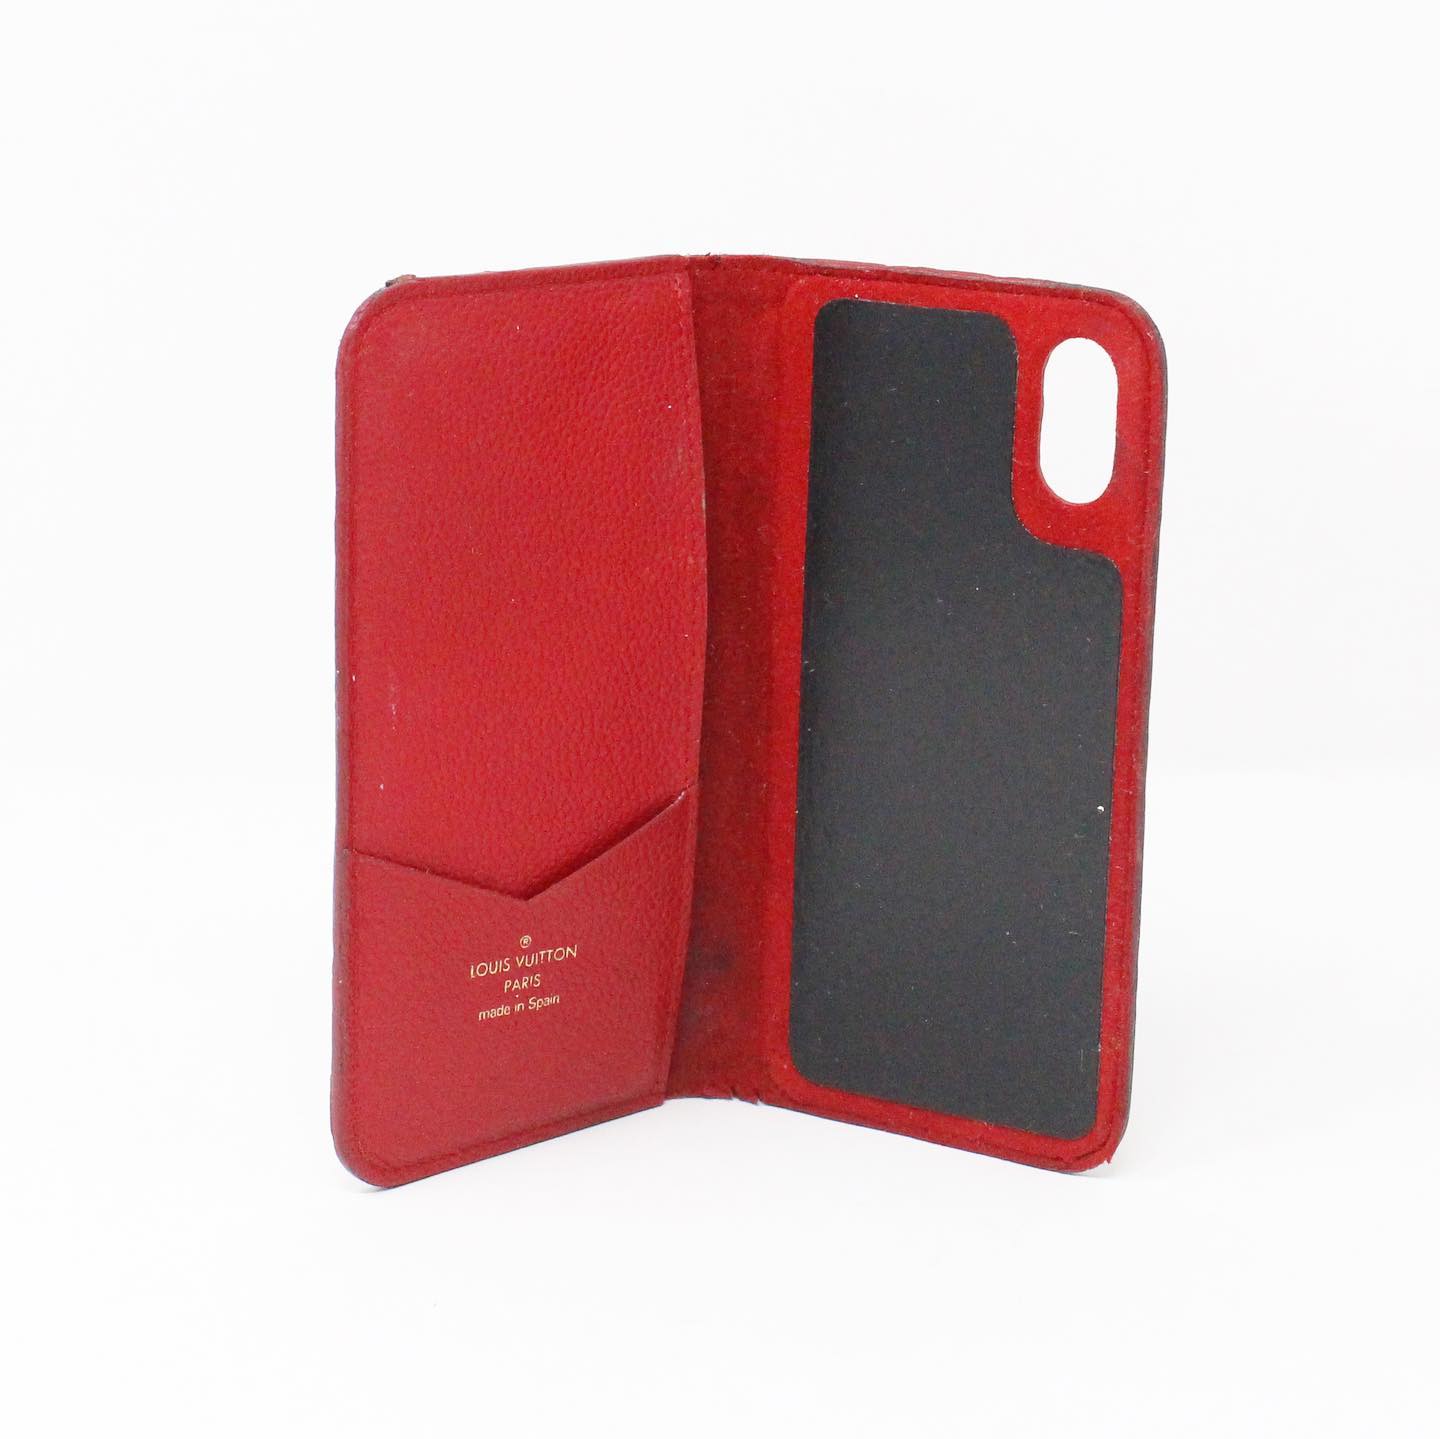 LOUIS VUITTON # Red Empreinte Leather Phone Case iPhone